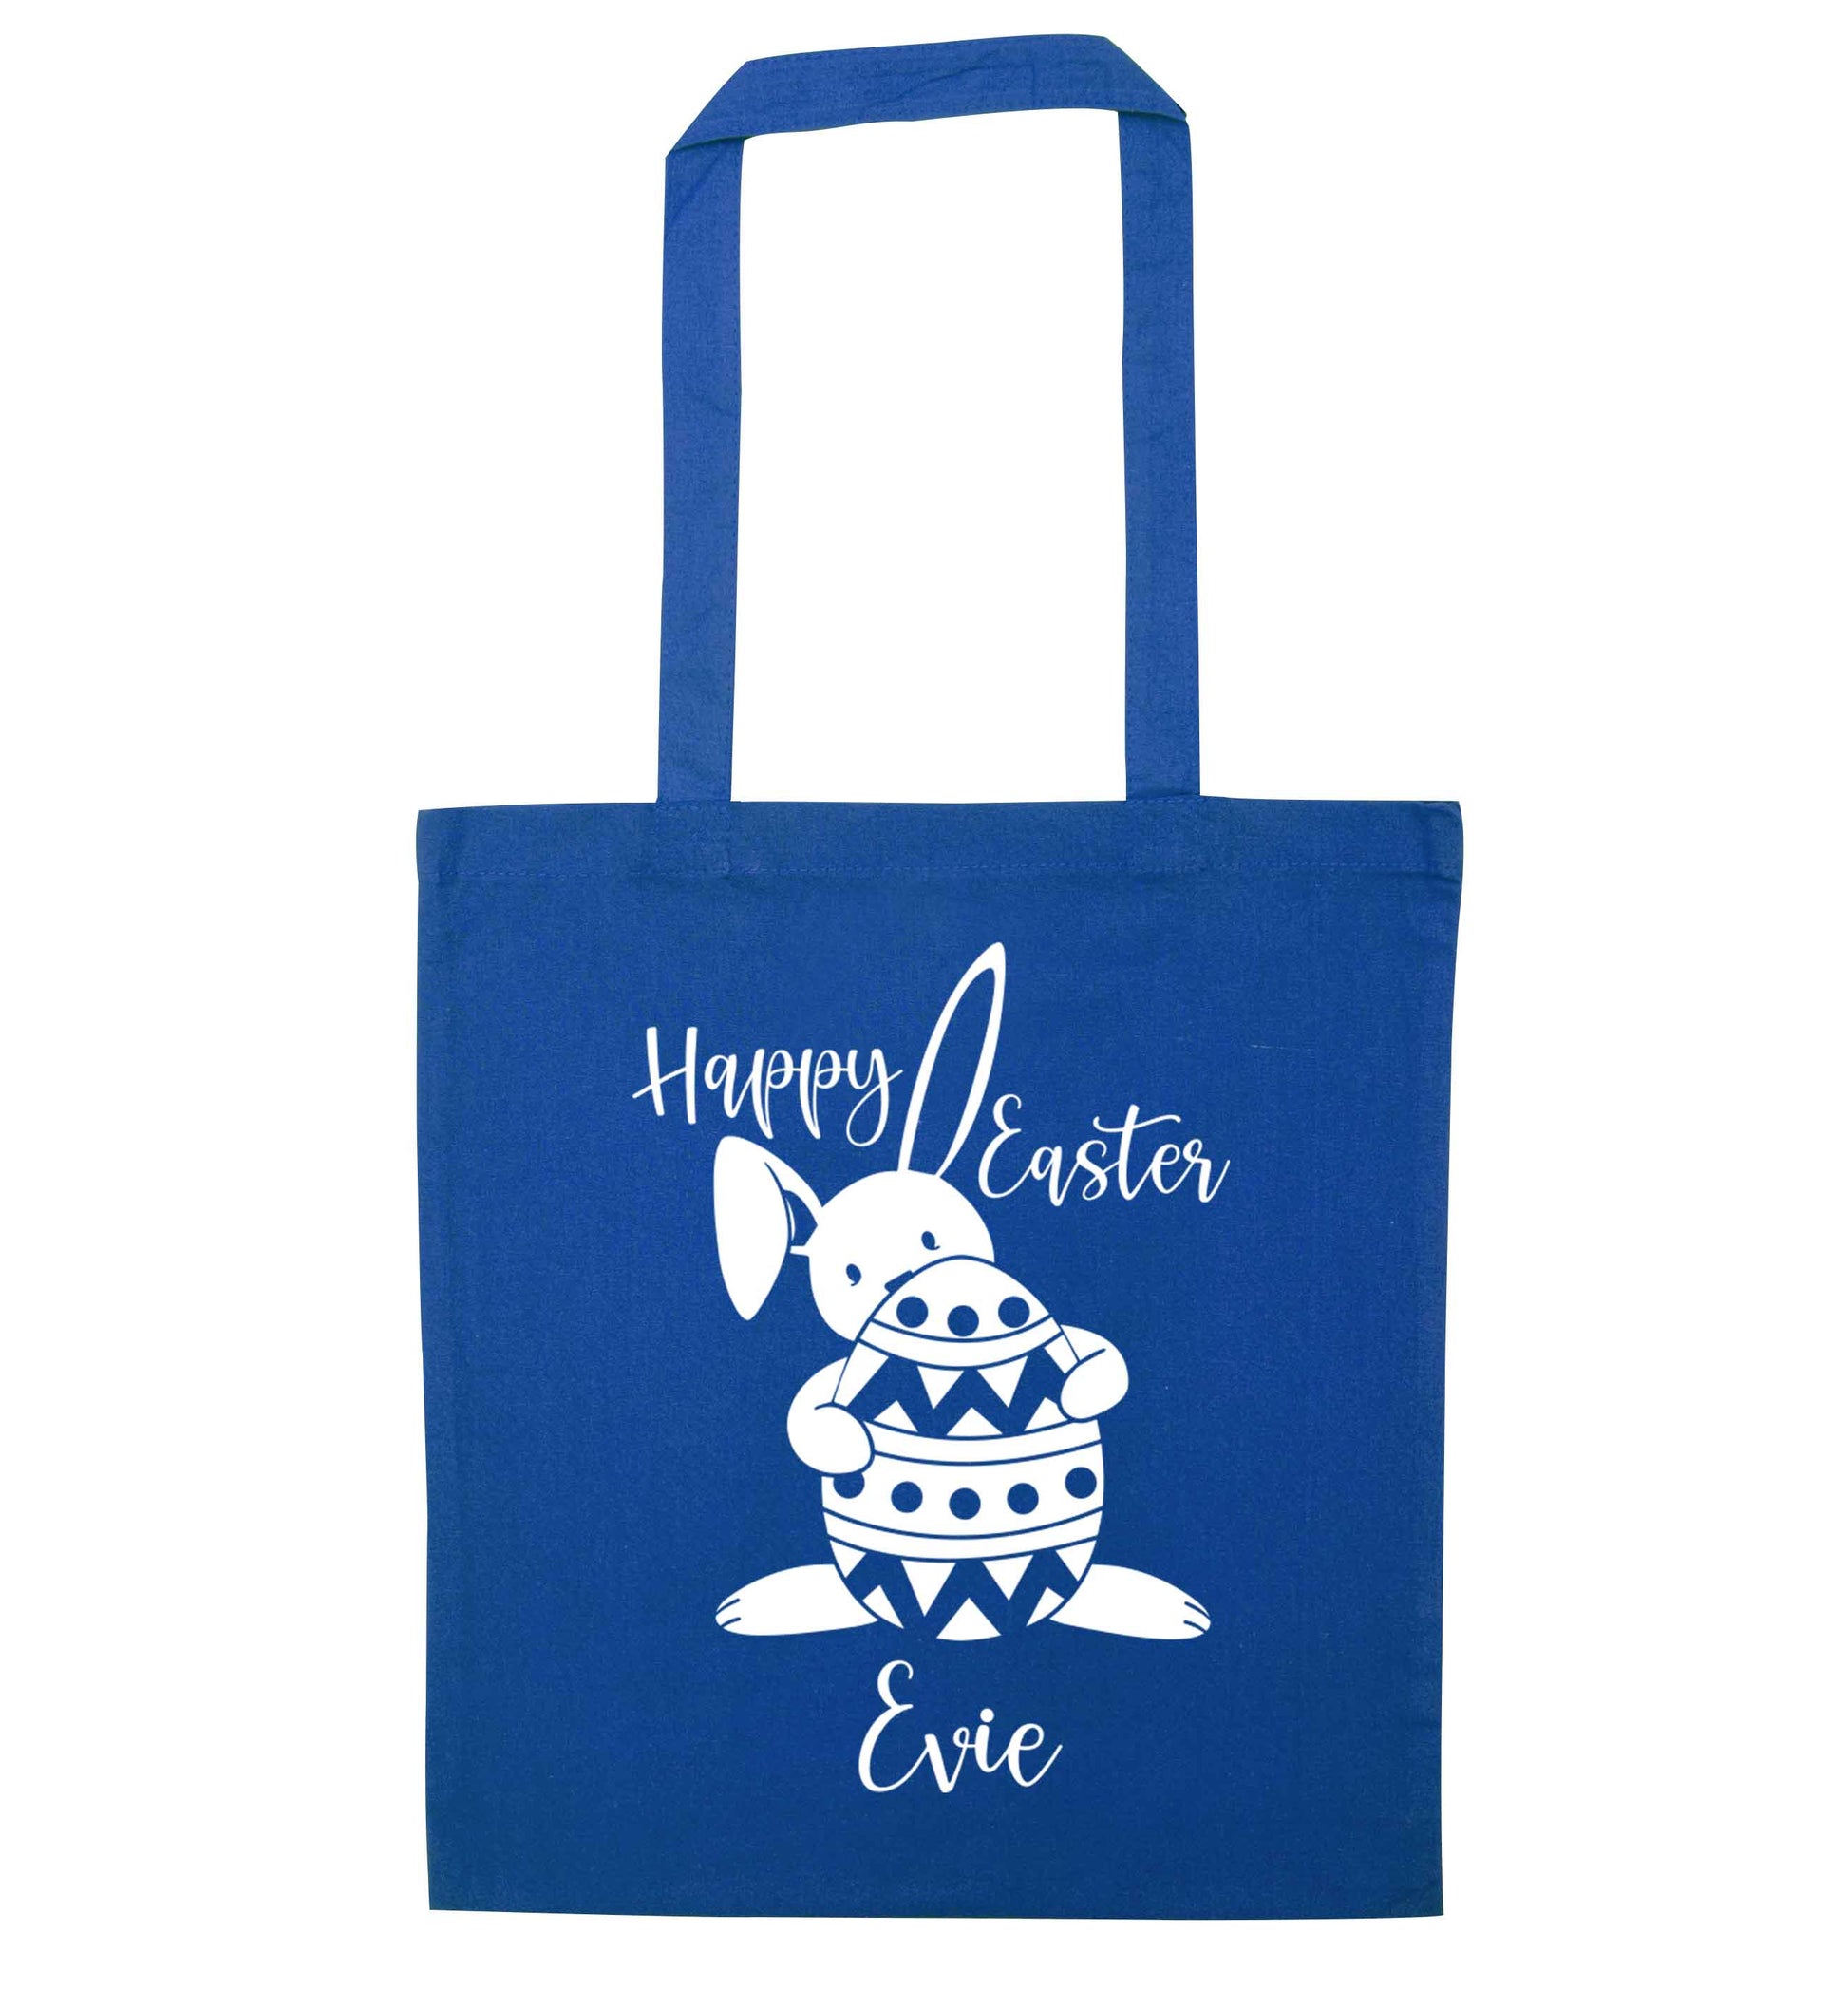 Happy Easter - personalised blue tote bag